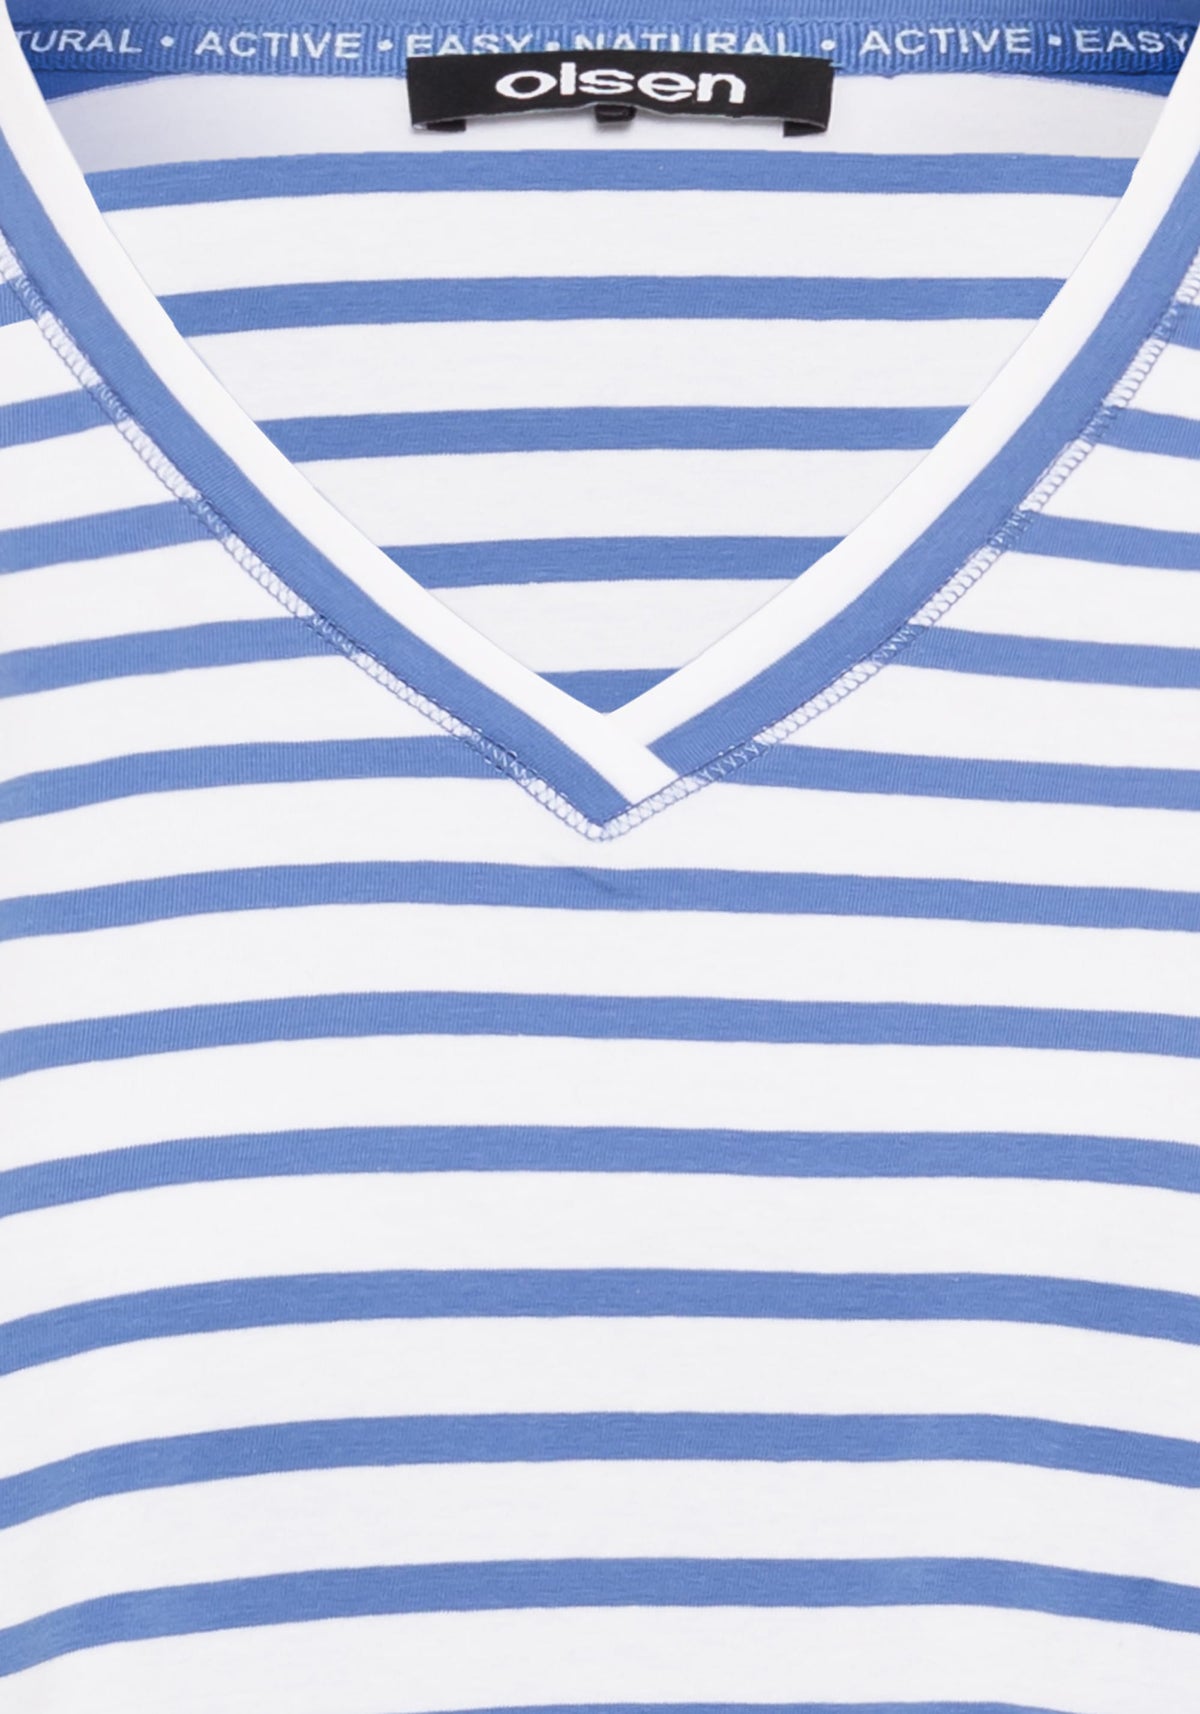 Cotton Blend Short Sleeve Striped V-Neck T-Shirt